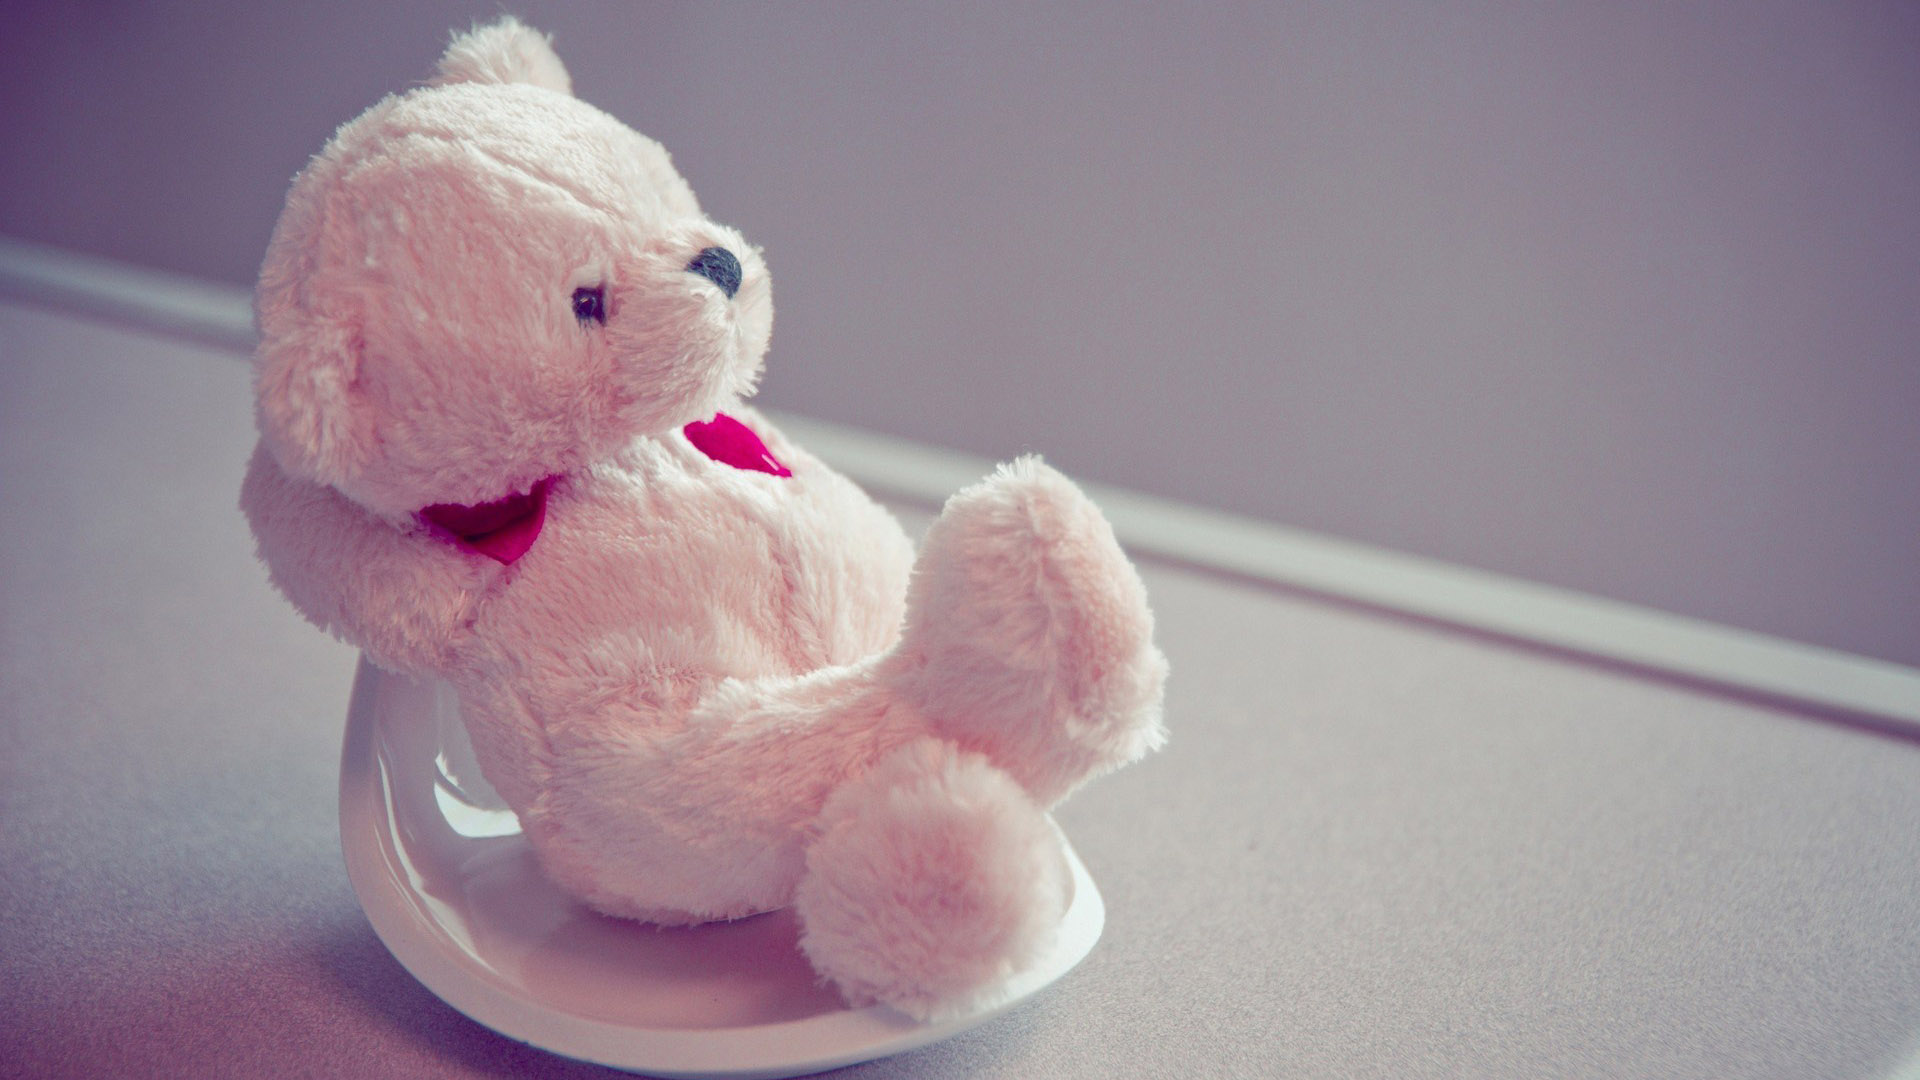 Pink Teddy Bear On Chinese Plate 2K Teddy Bear